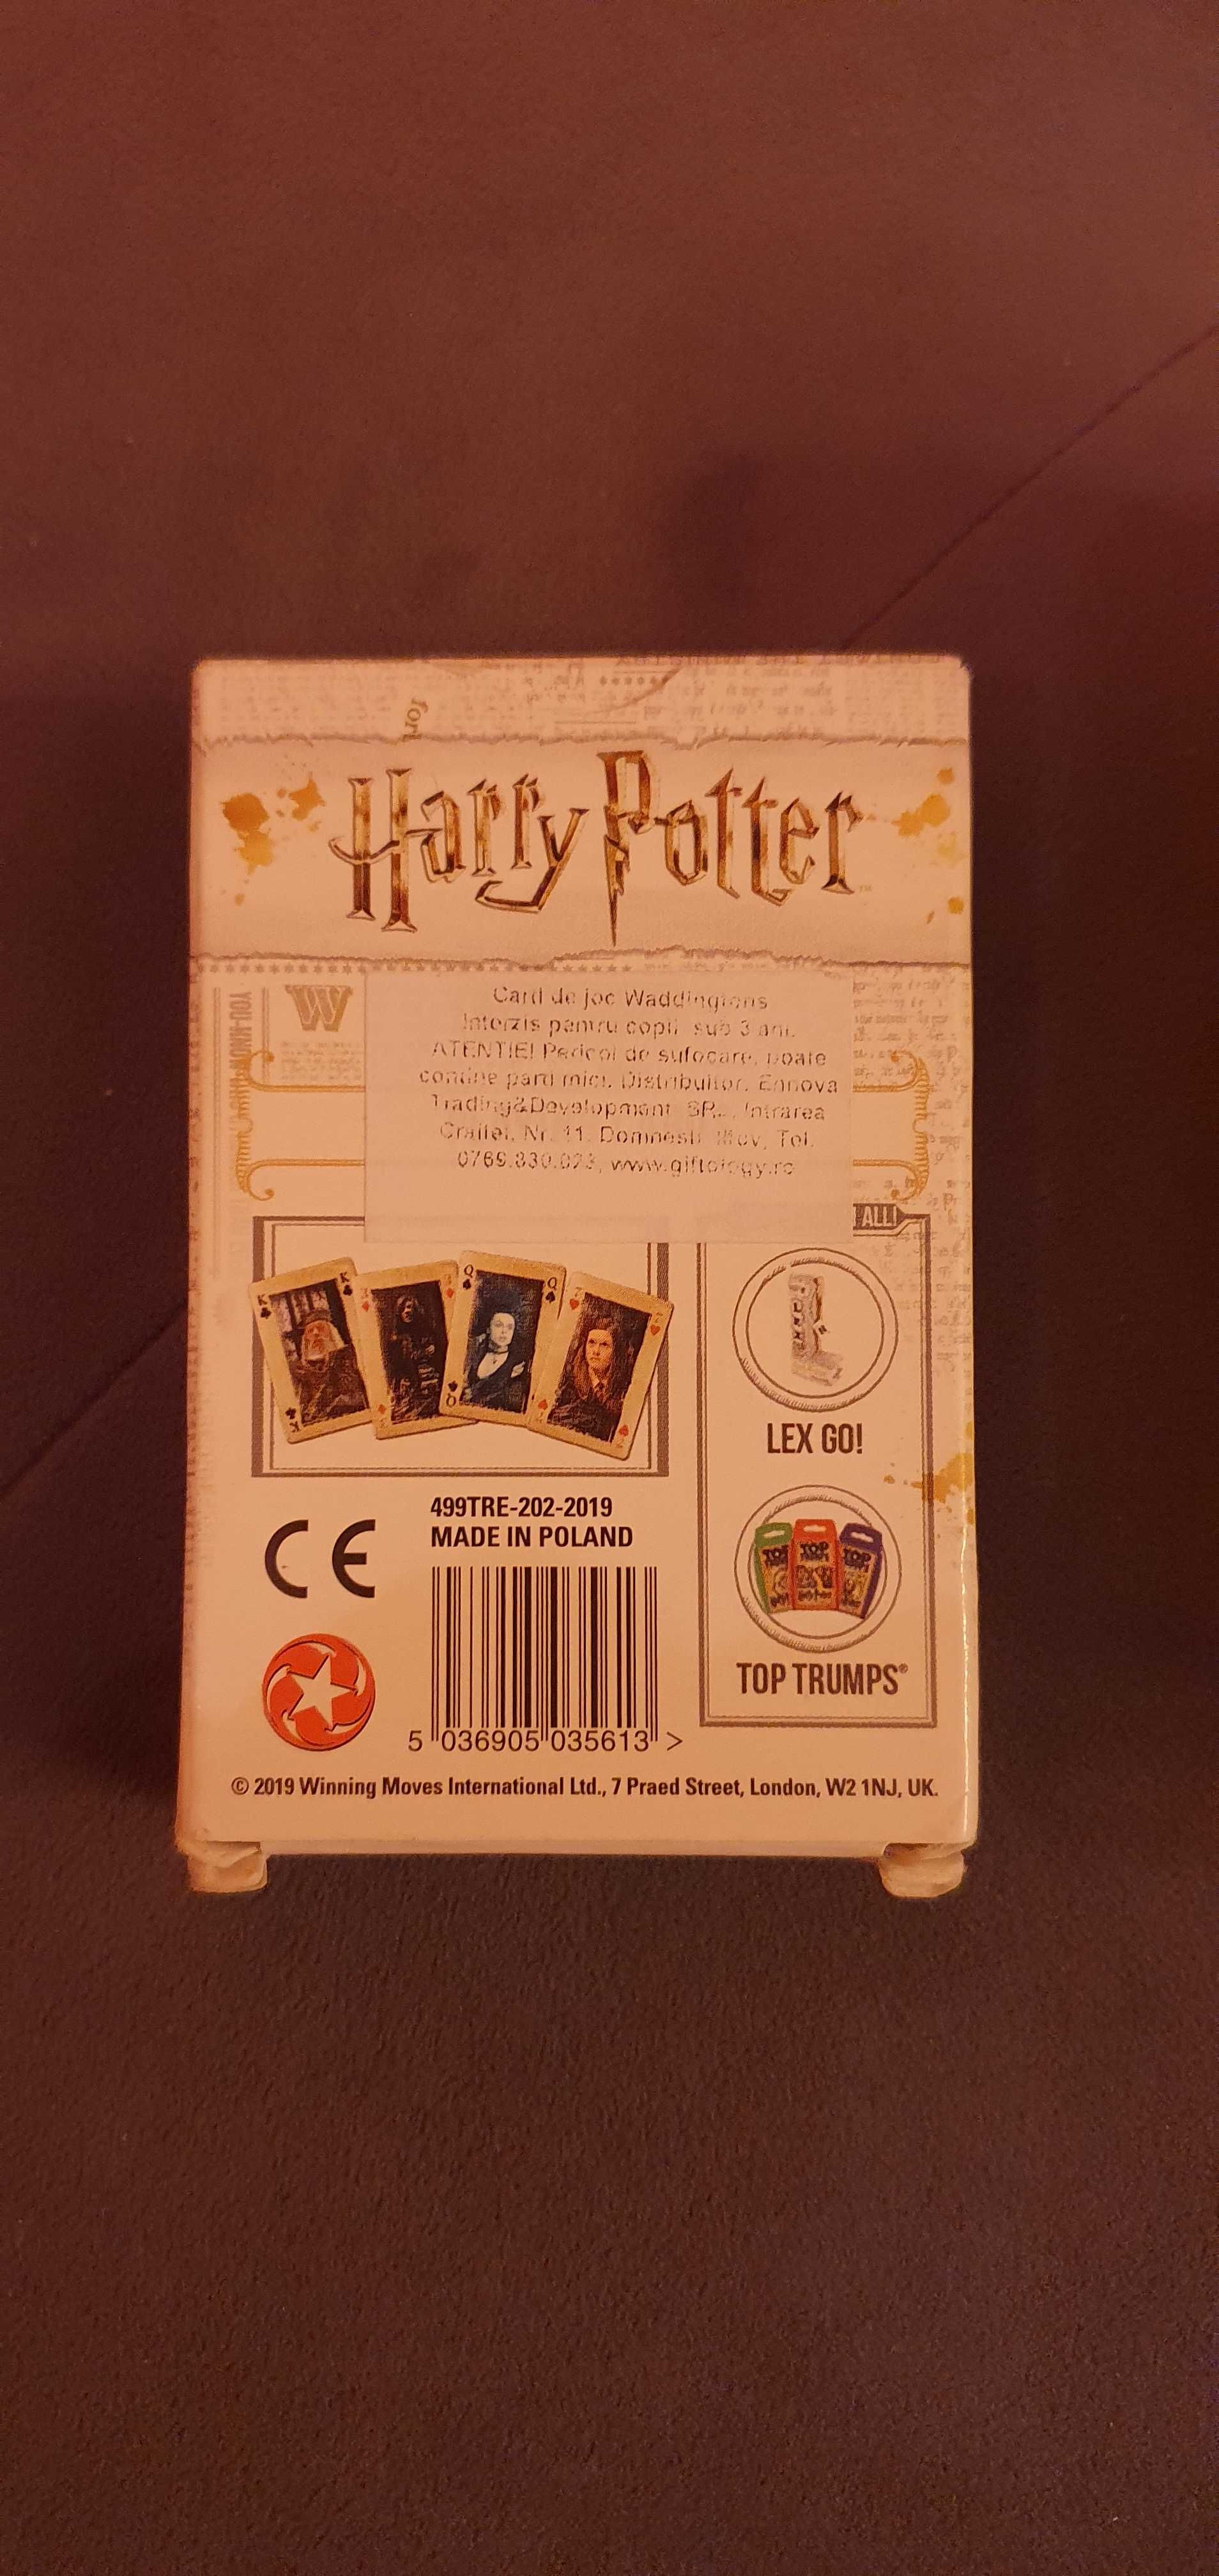 Carti de joc Harry Potter si joc Trivial Pursuit Harry Potter